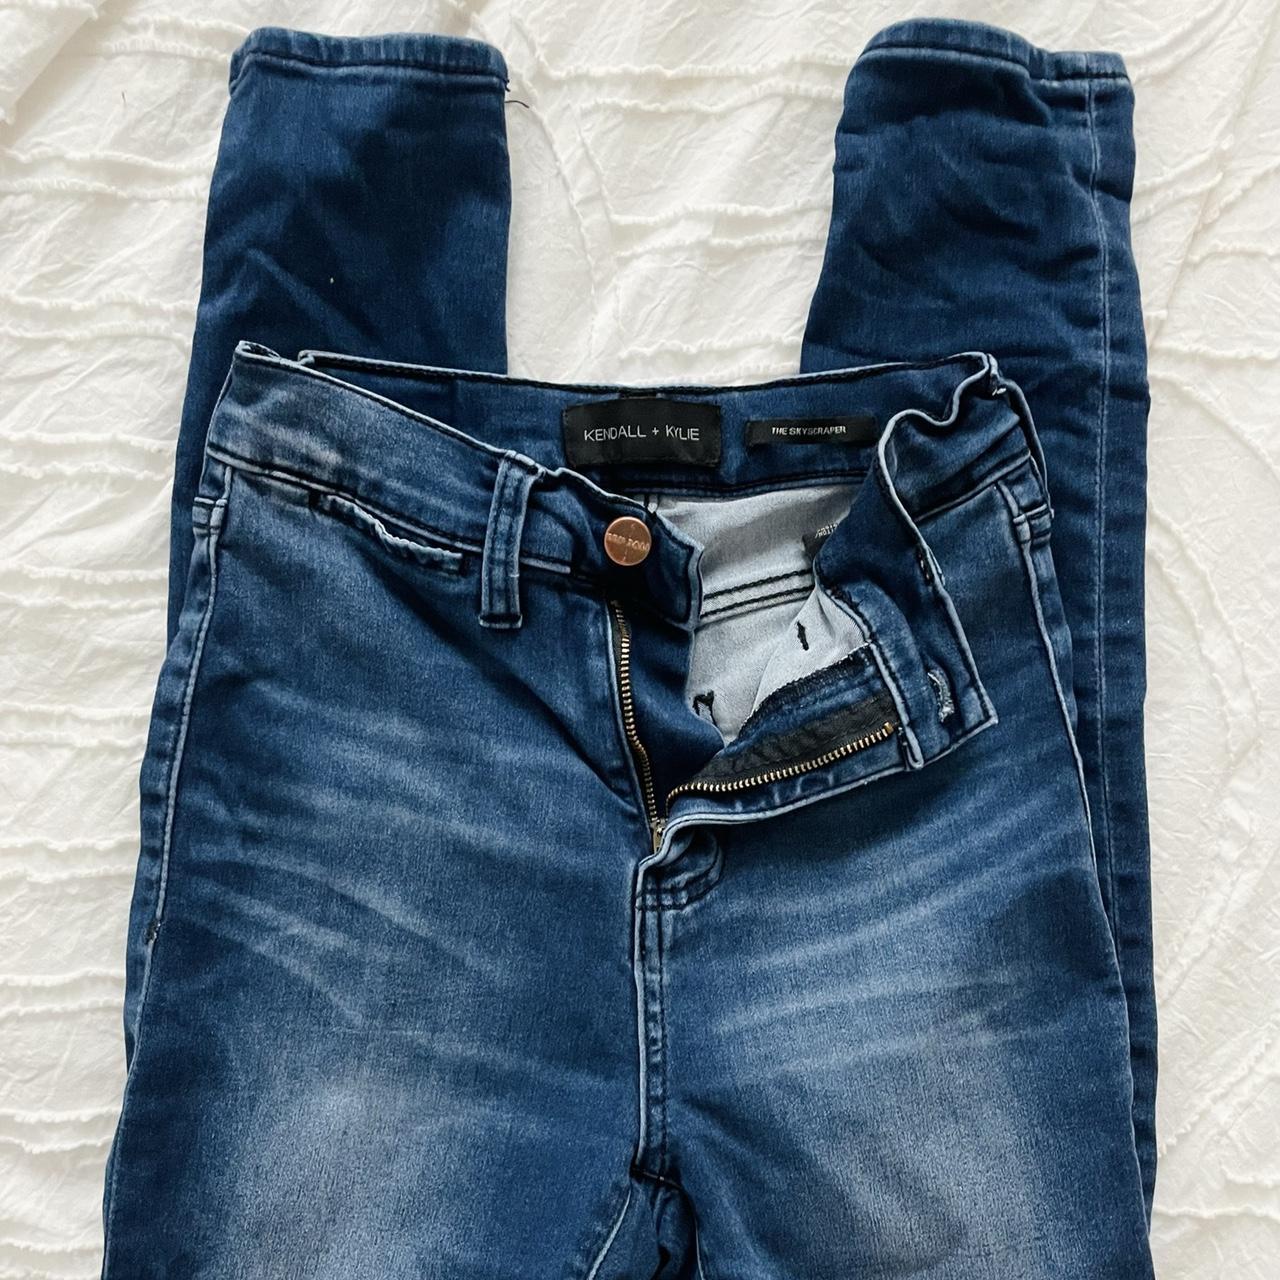 KENDALL + KYLIE Women's Blue Jeans | Depop